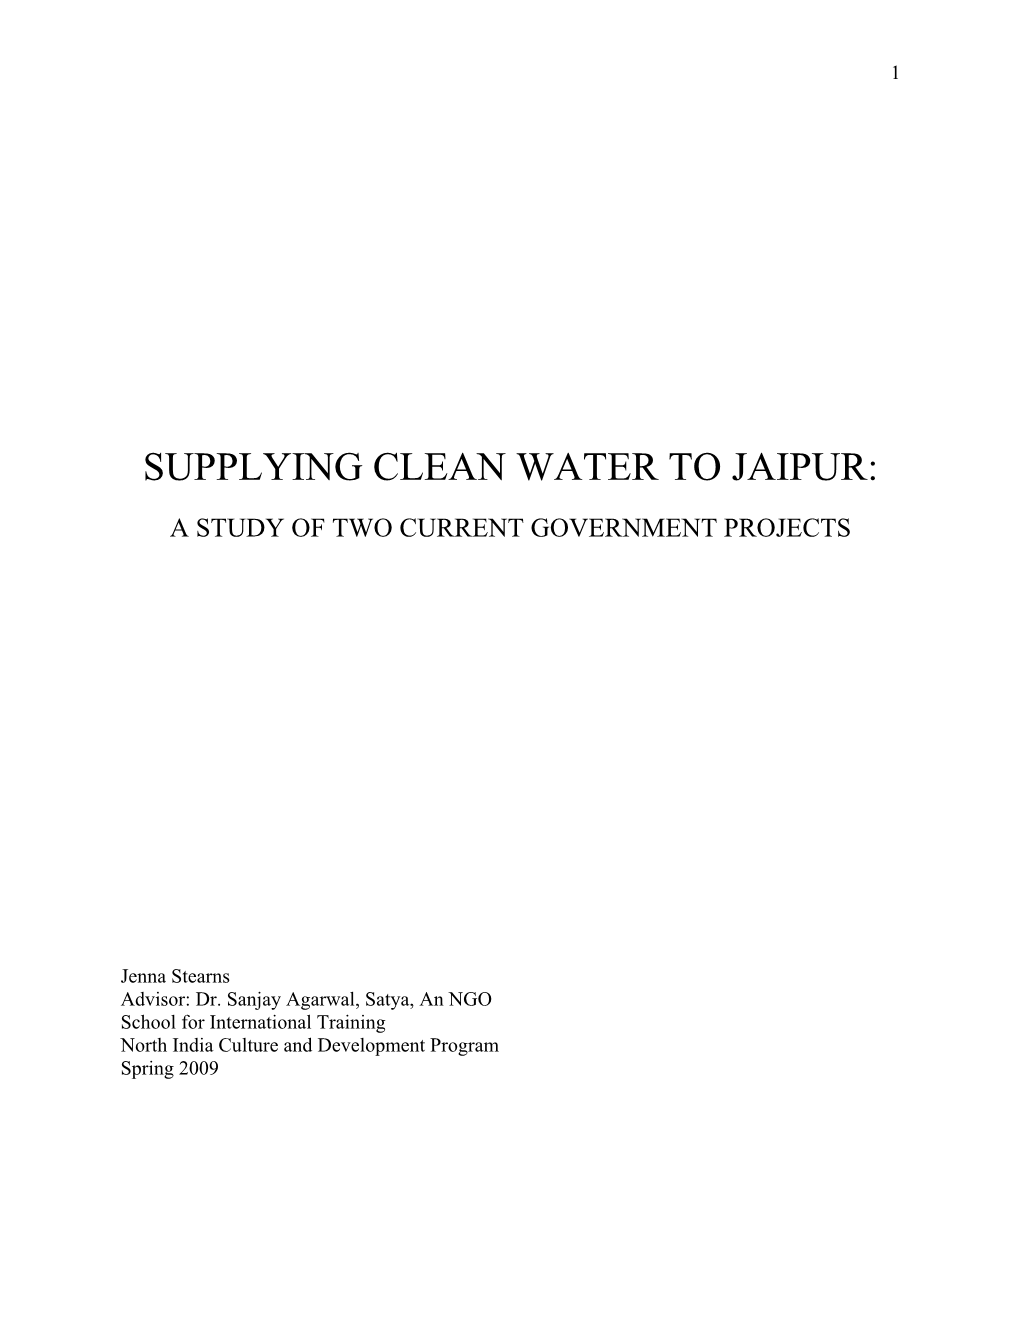 Supplying Clean Water to Jaipur